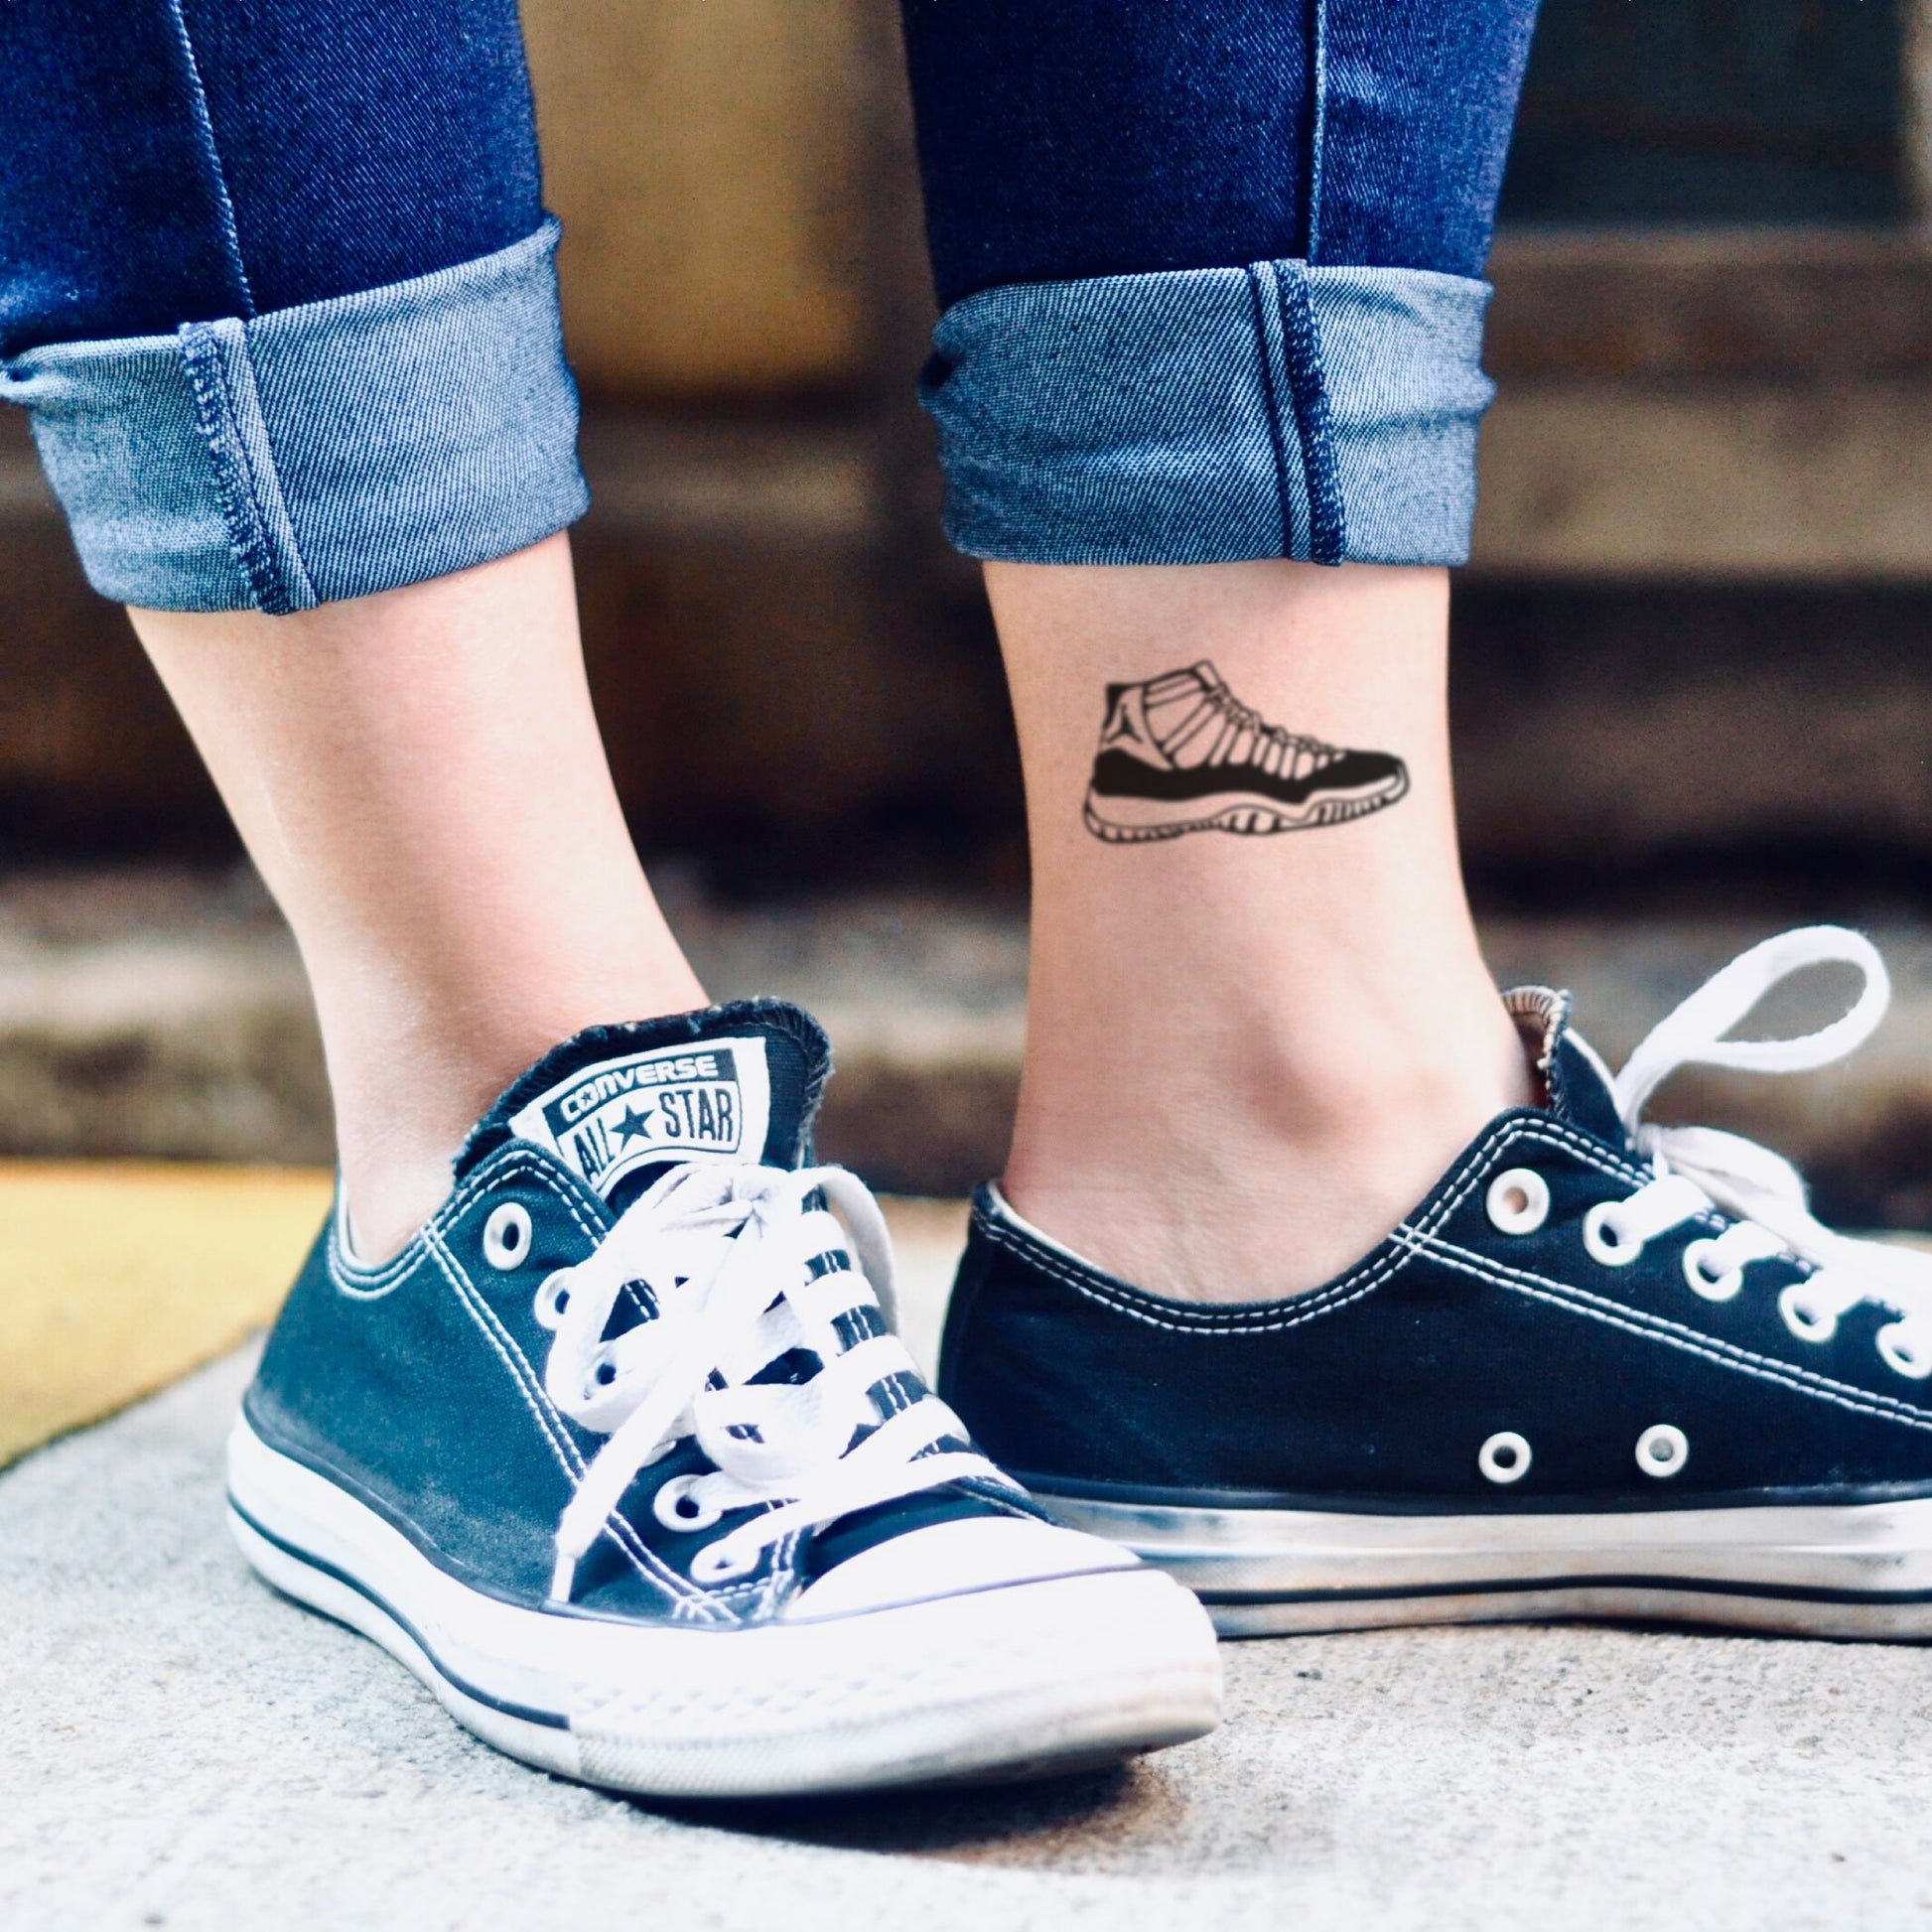 fake small air jordan illustrative temporary tattoo sticker design idea on ankle